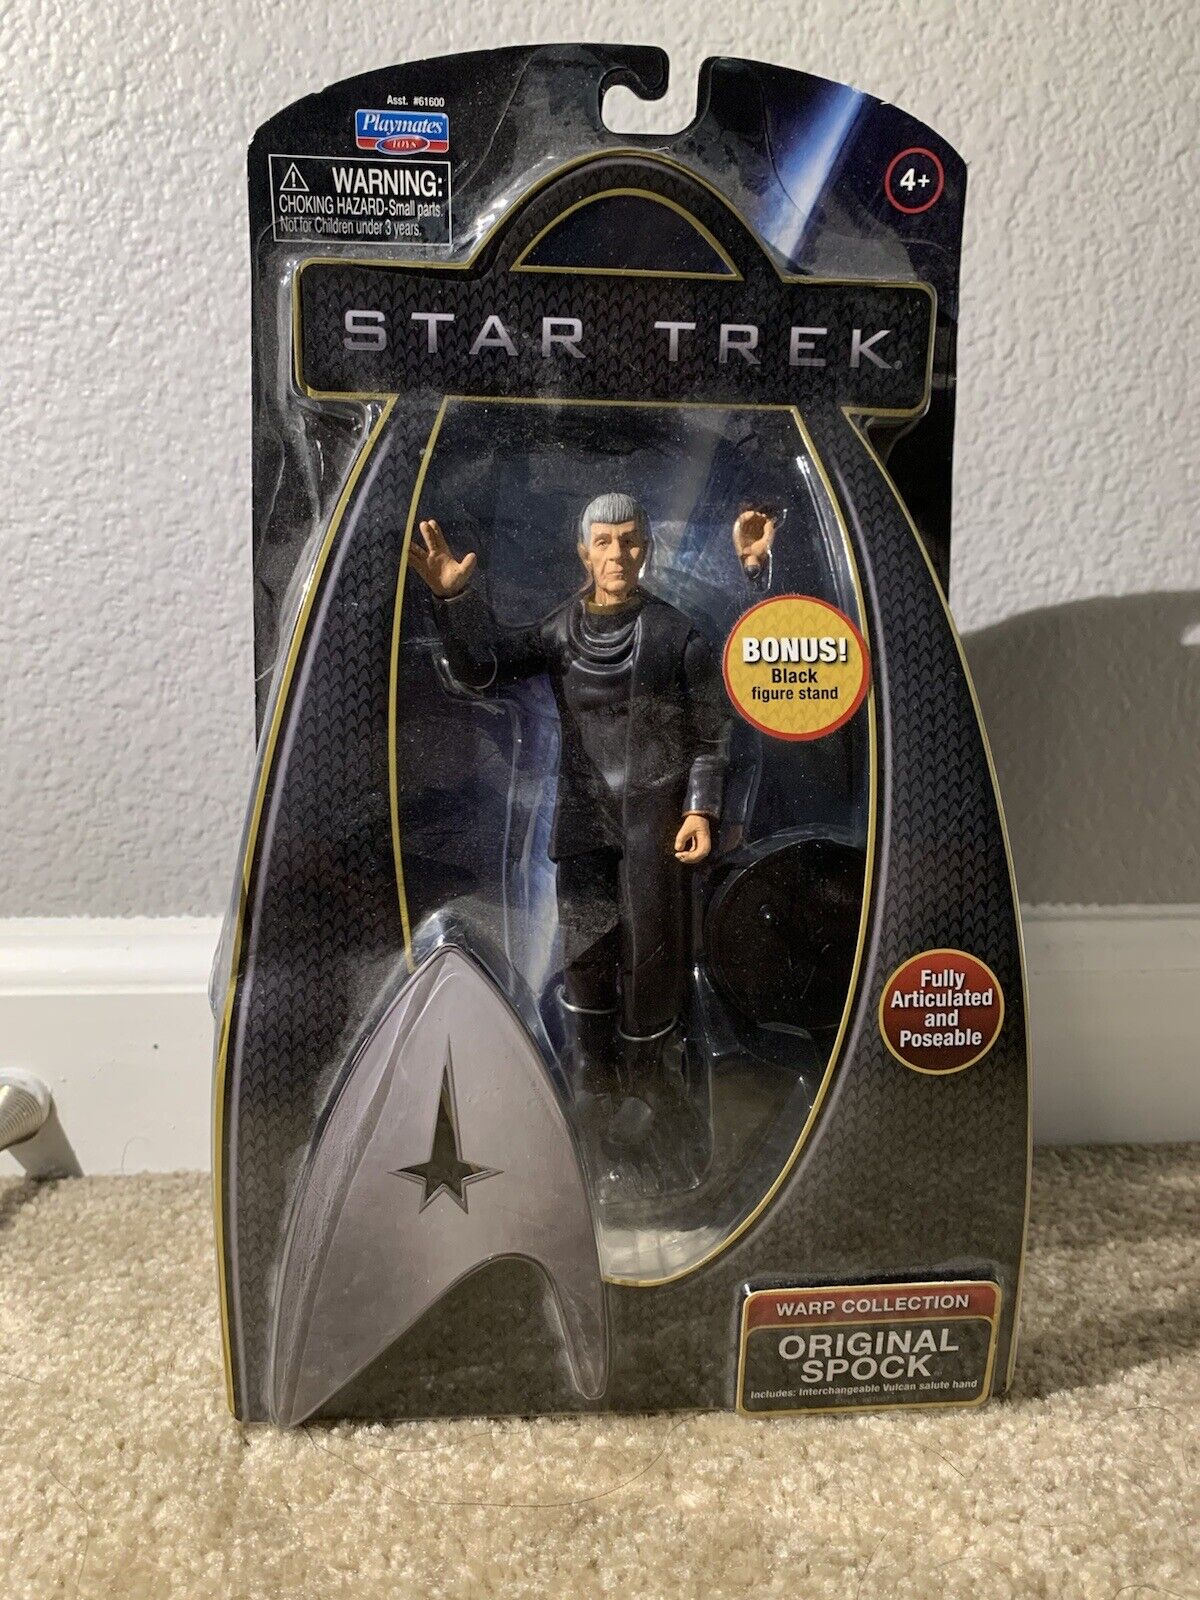 Star Trek (2009) Warp Collection “Original Spock” Action Figure By Playmates